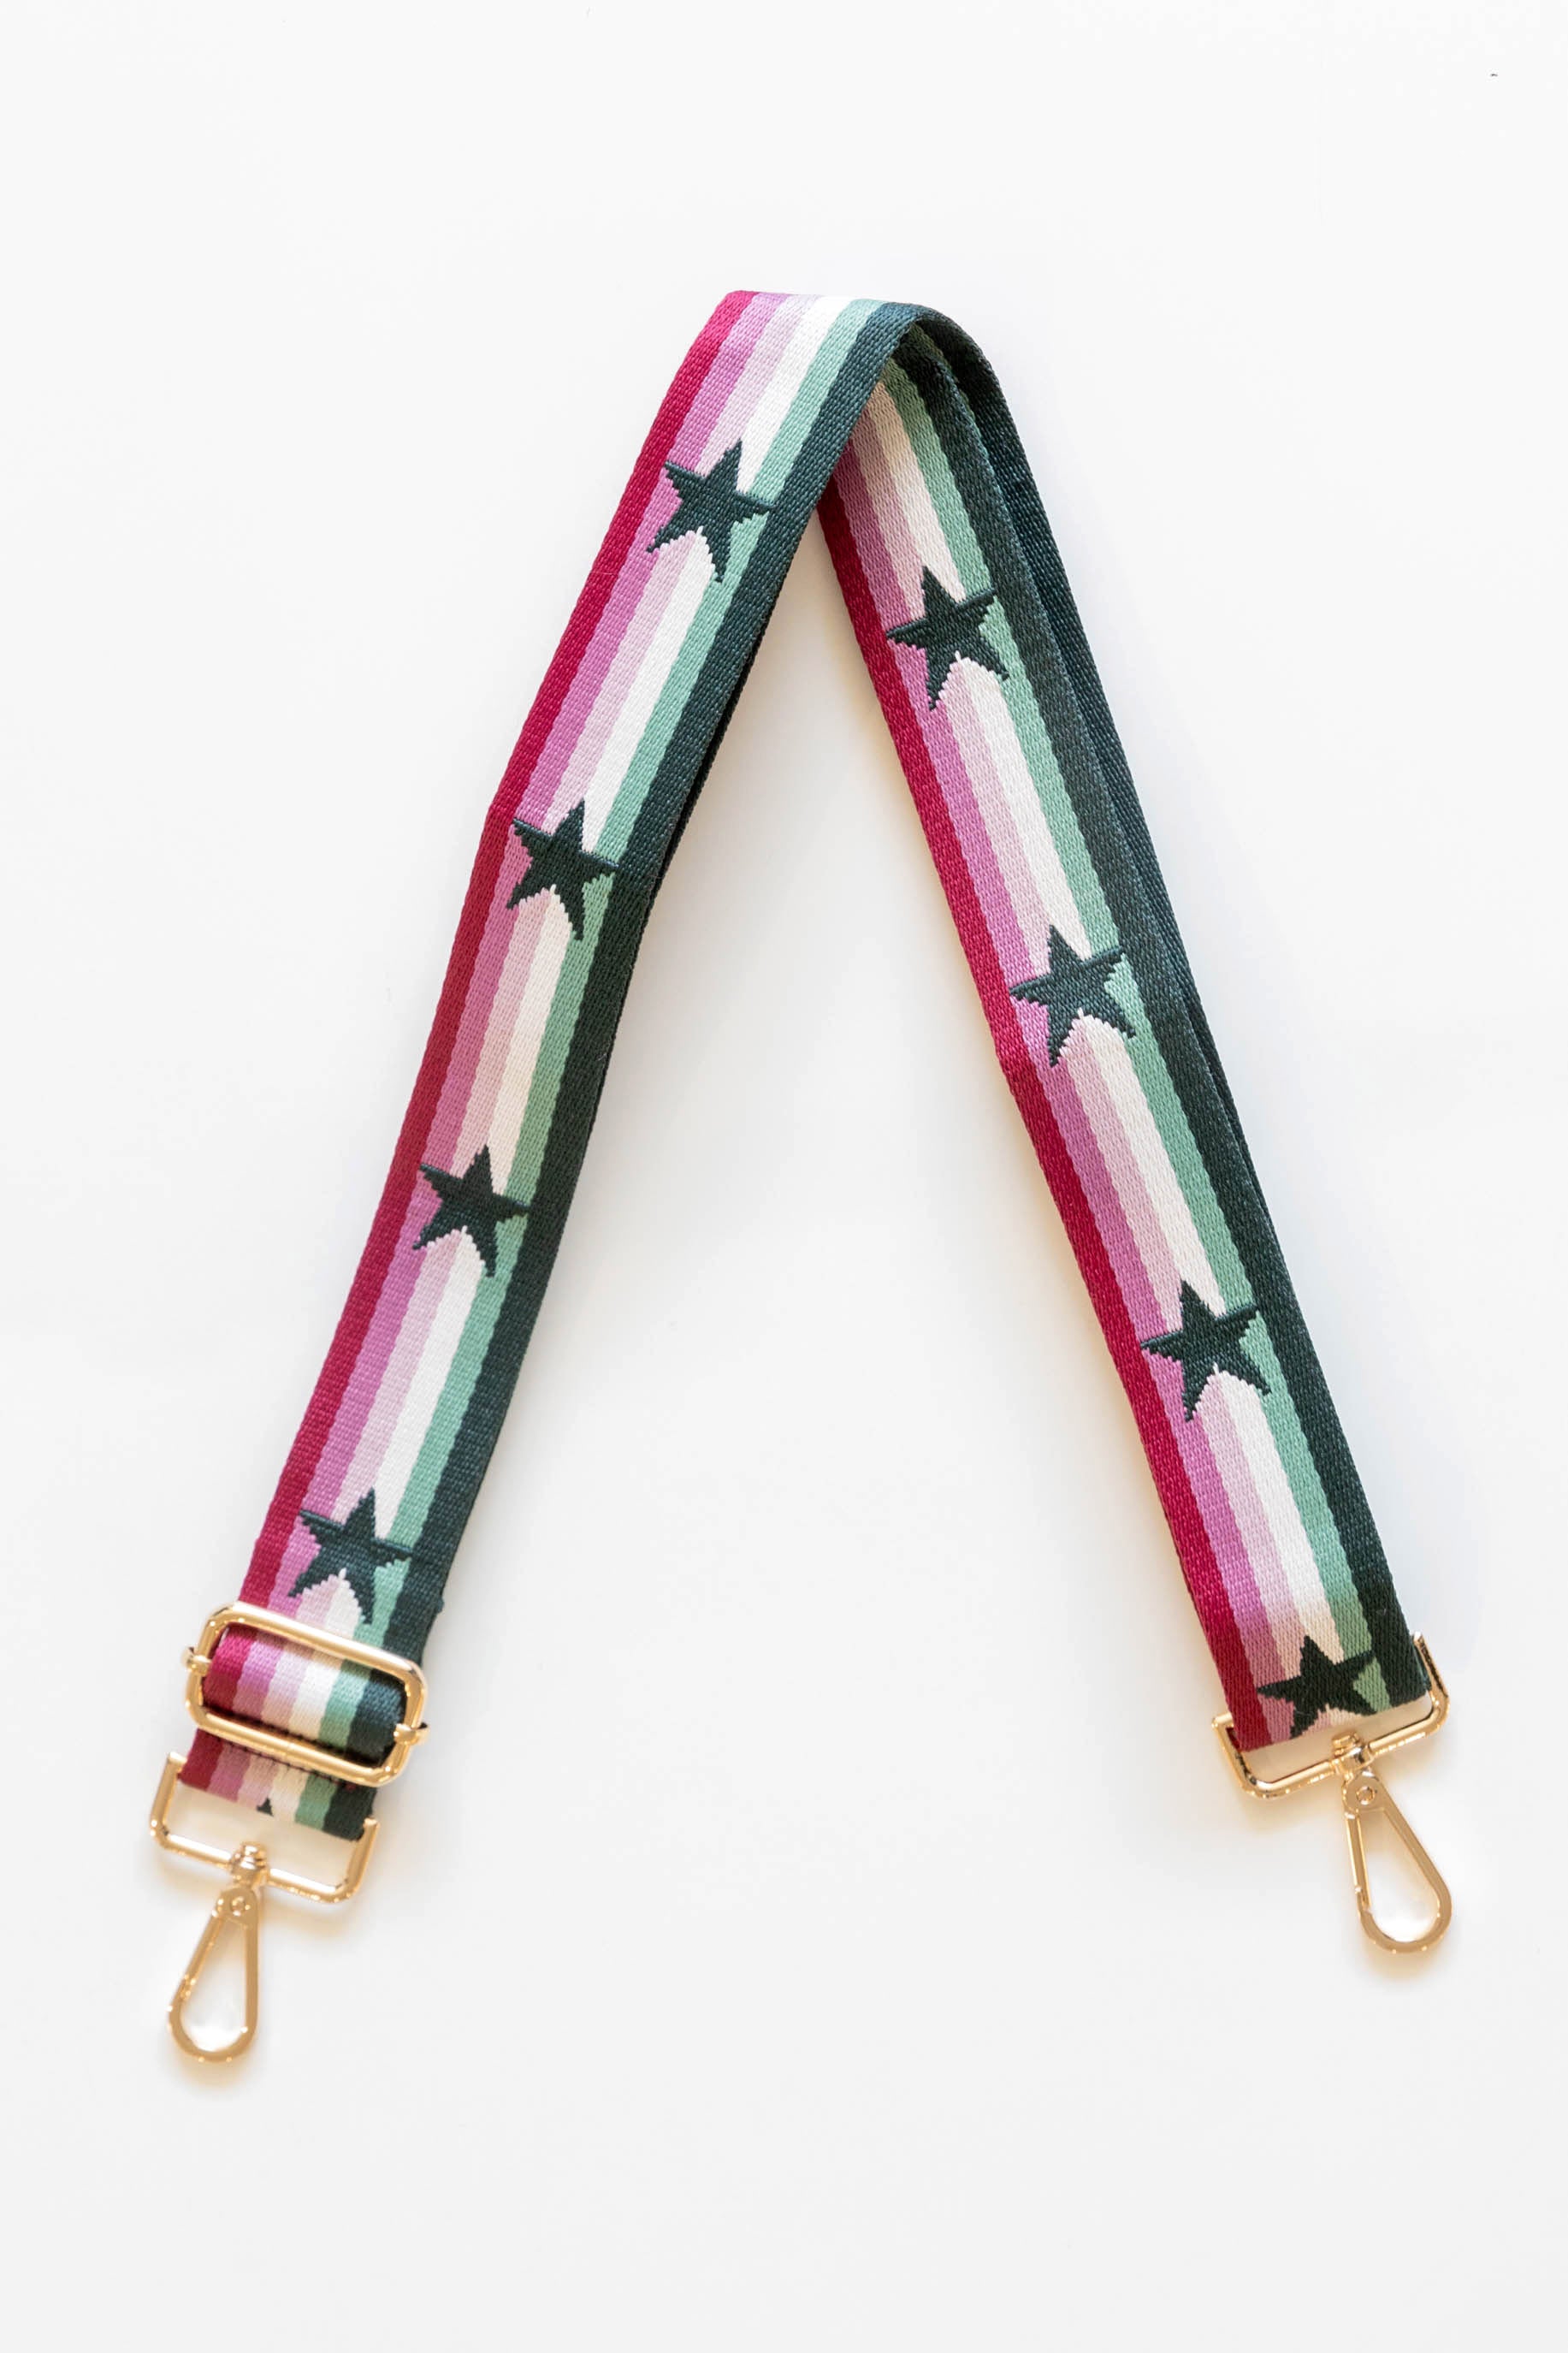 Stars & Stripes Bag Strap - Pink/Green